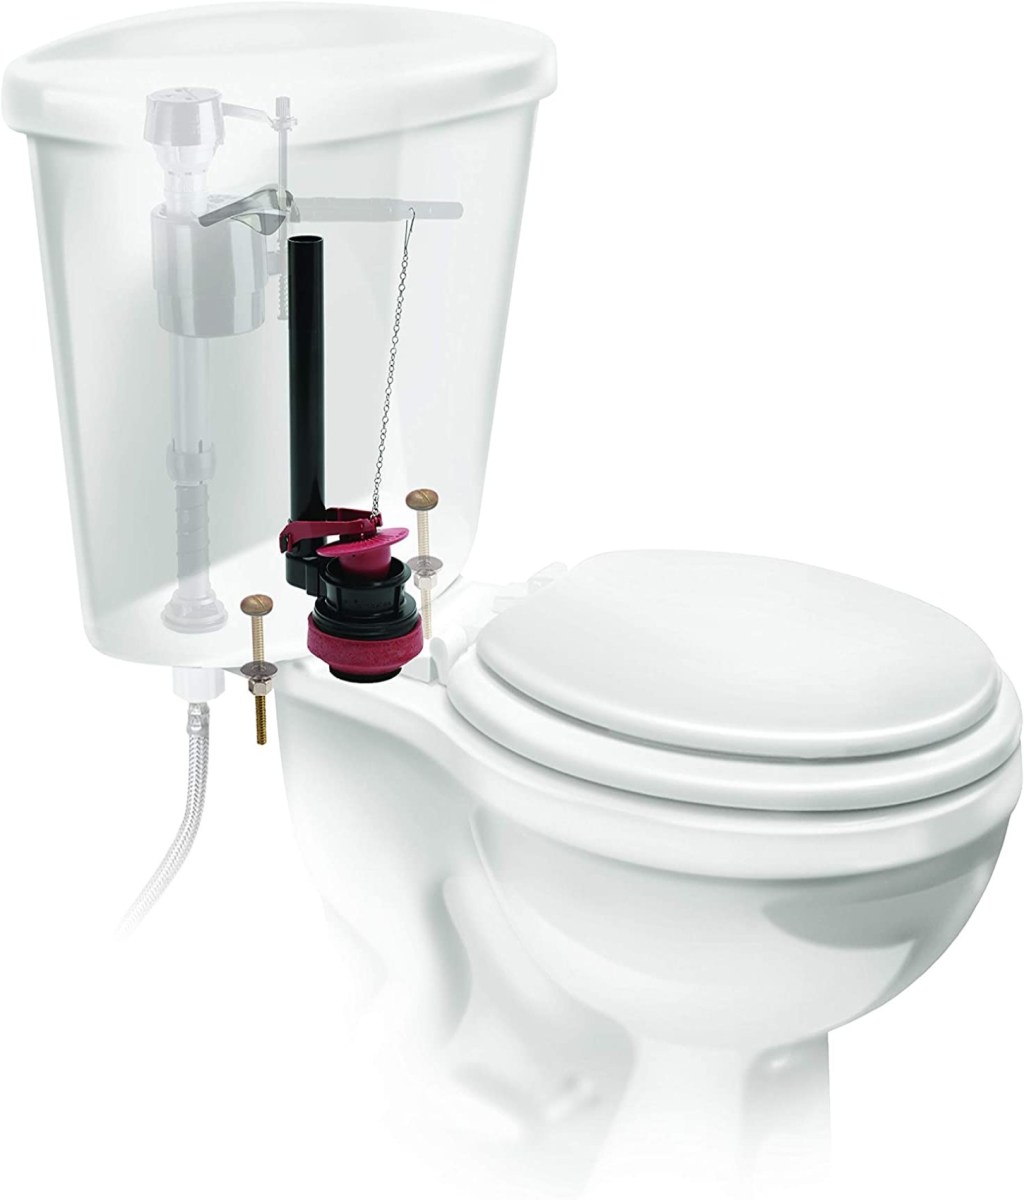 The Best Toilet Repair Kits Options